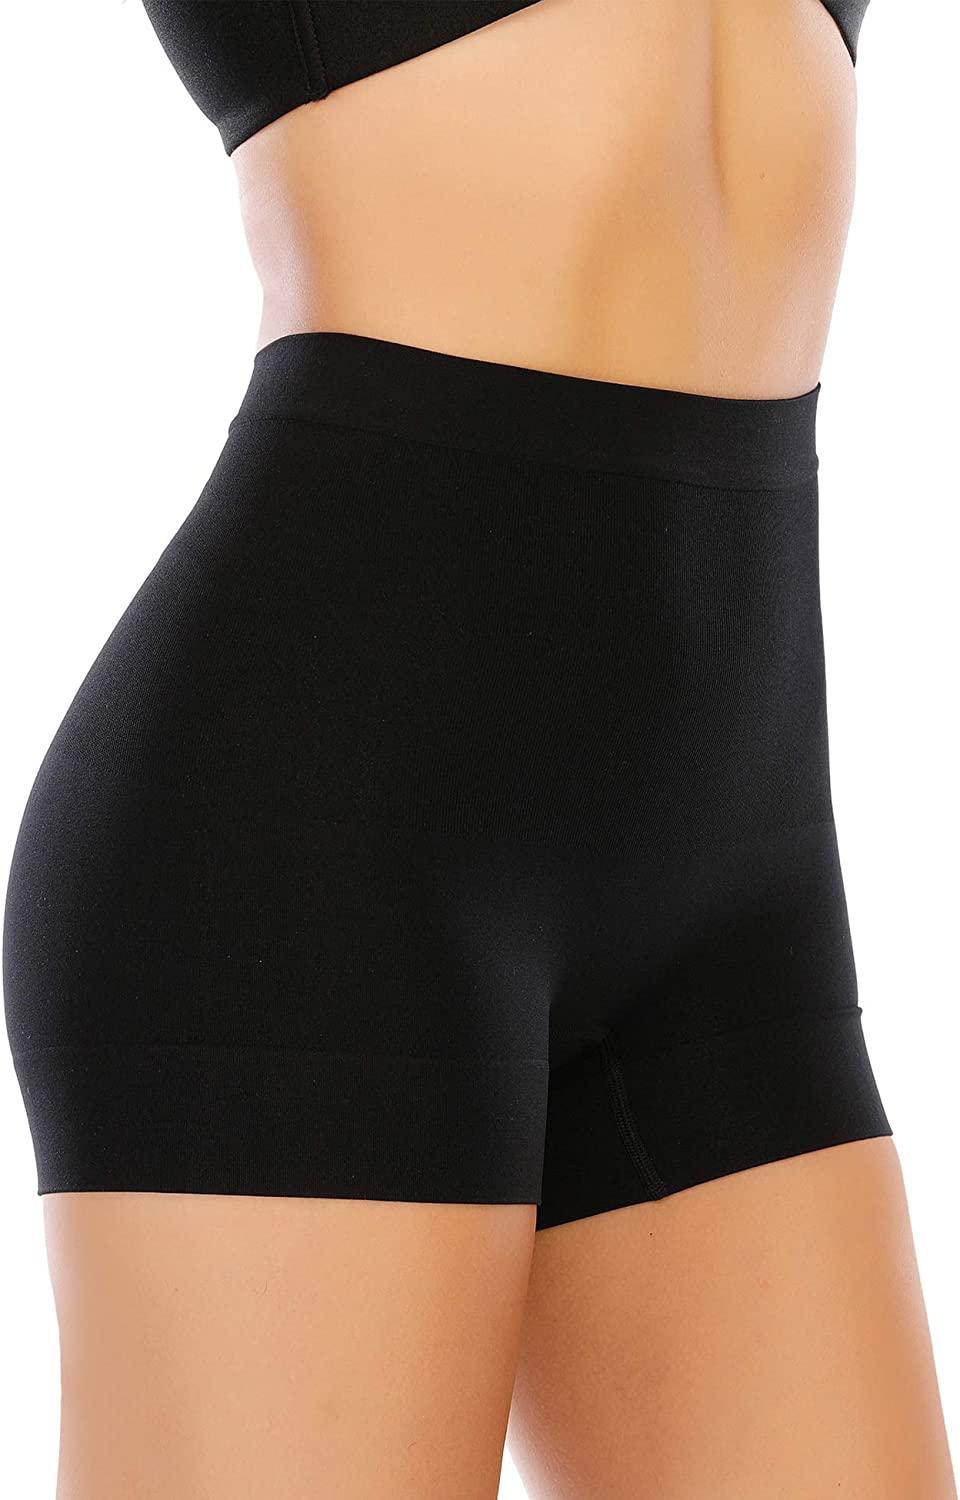  Womens Seamless Shaping Boyshorts Panties Tummy Control  Underwear Slimming Shapewear Shorts